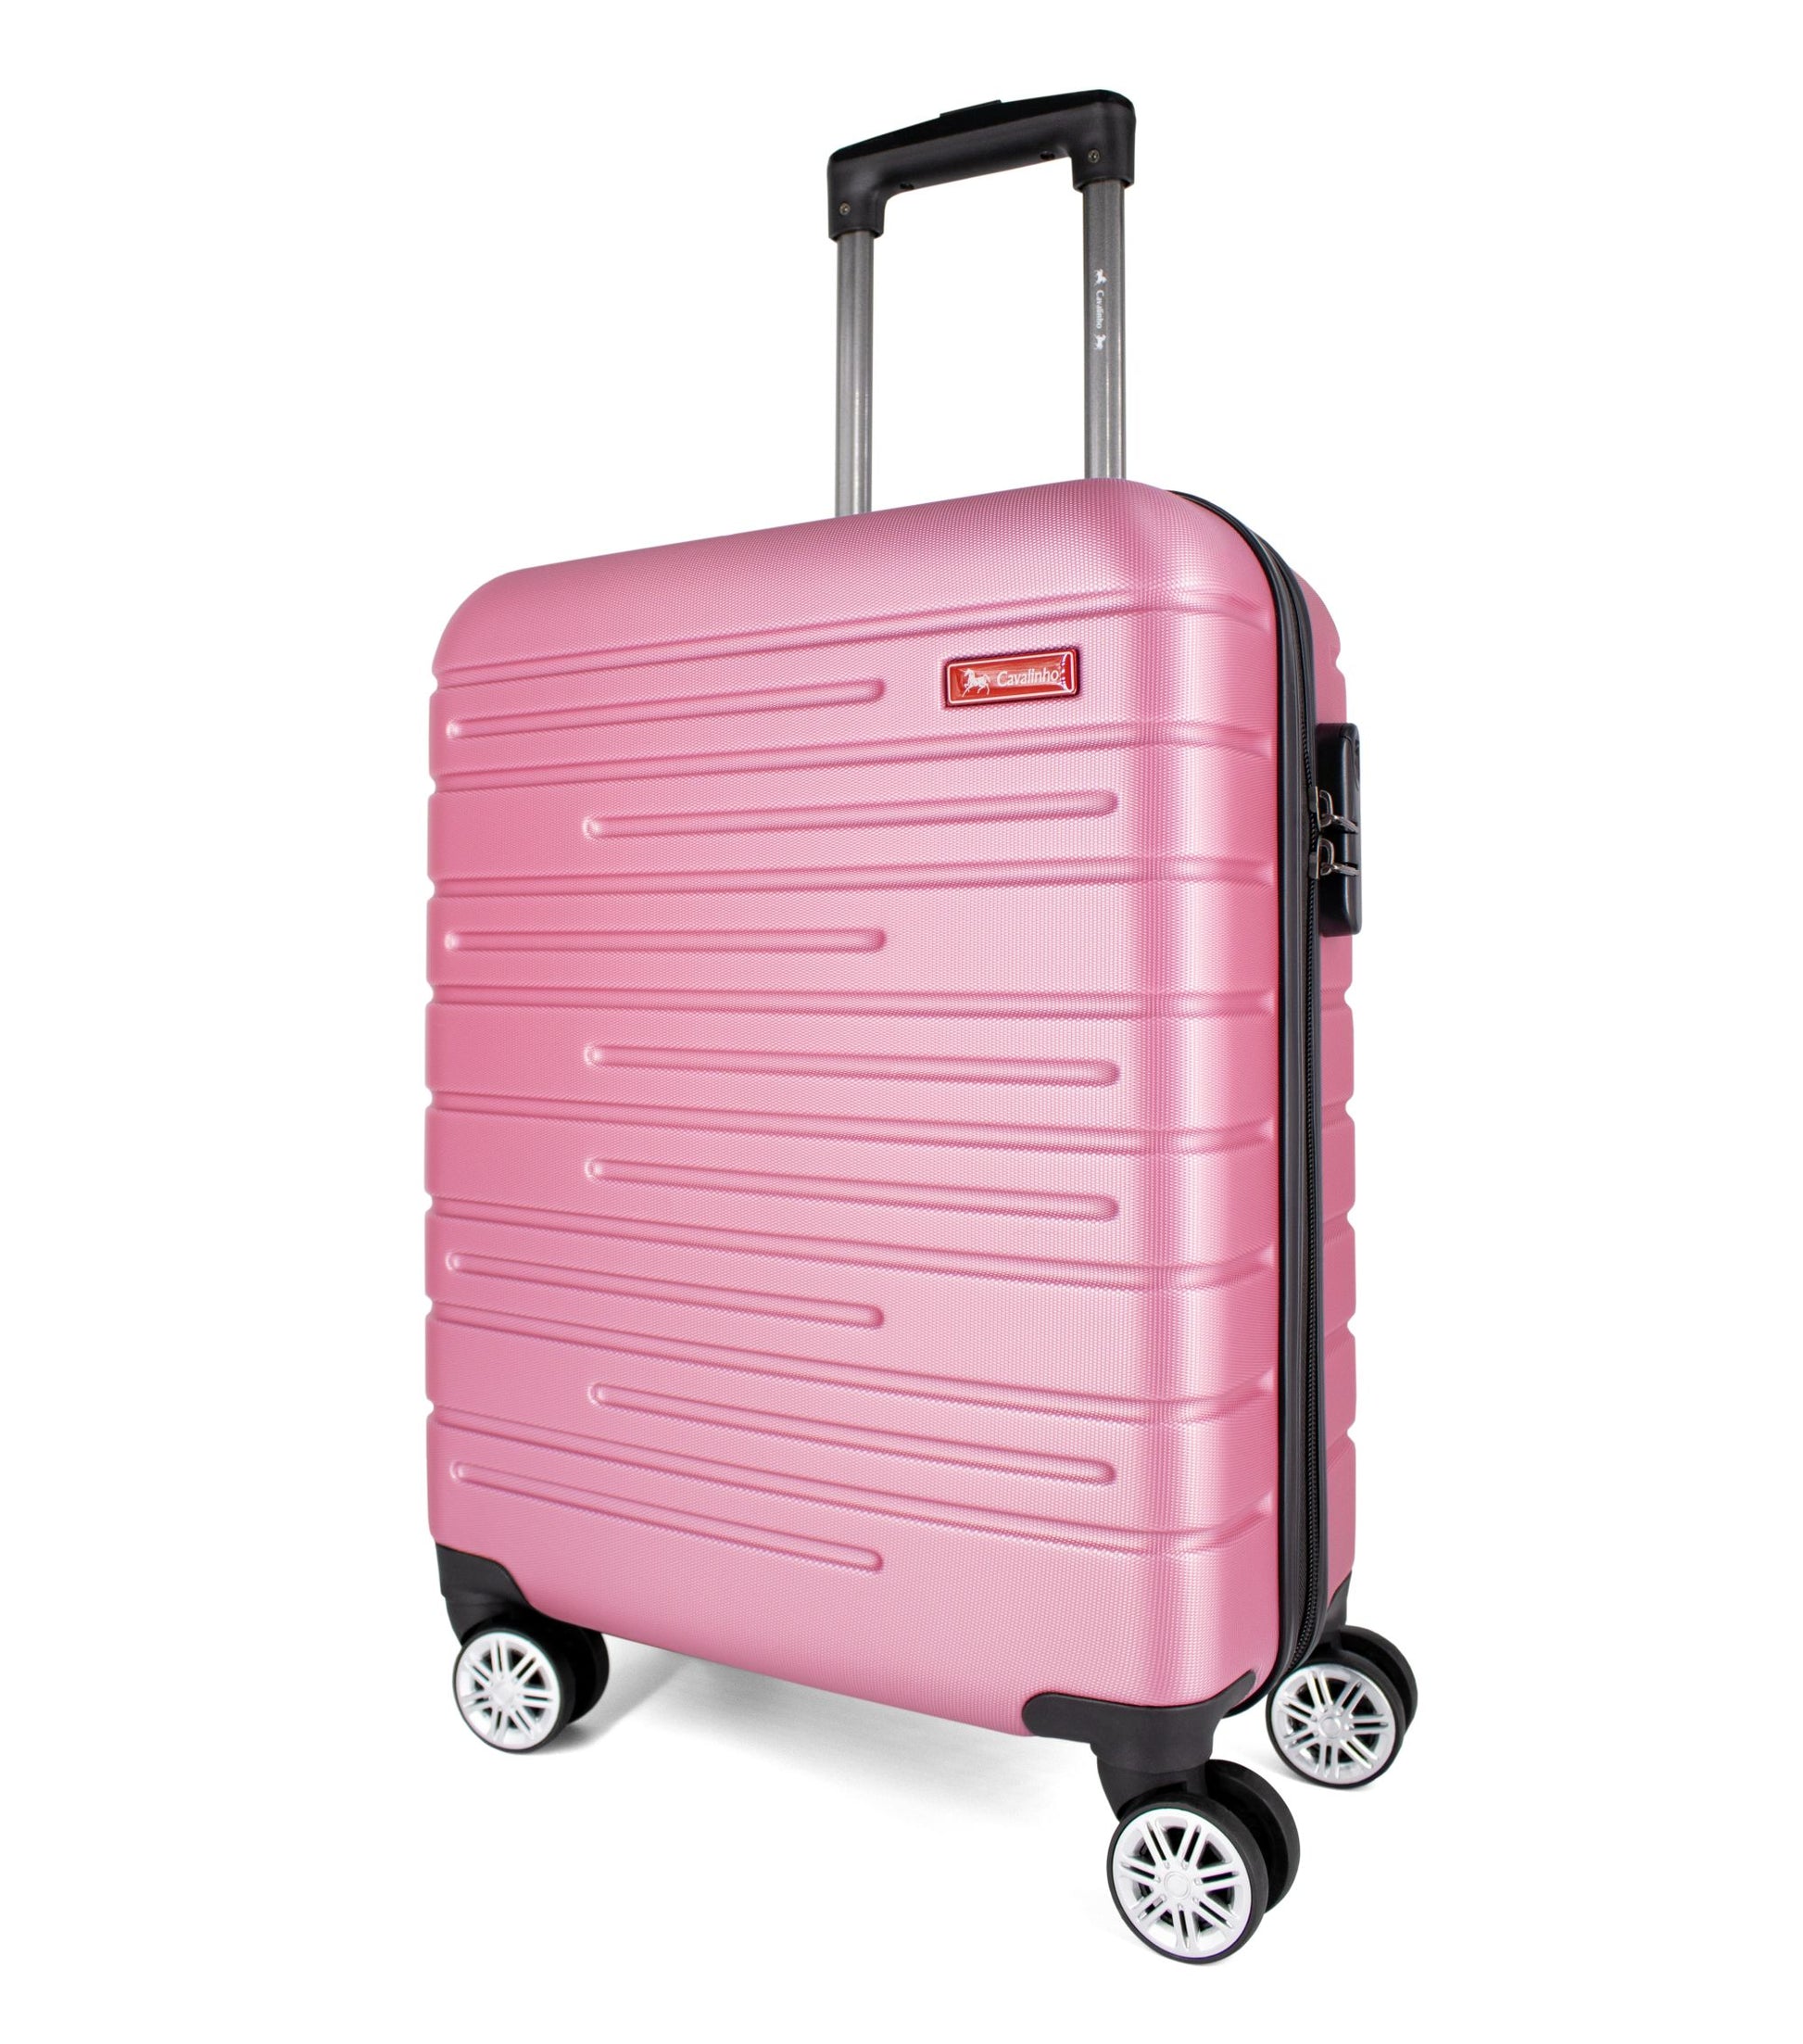 Cavalinho Bon Voyage Carry-on Hardside Luggage (19") - 19 inch Pink - 68020005.18.19_2